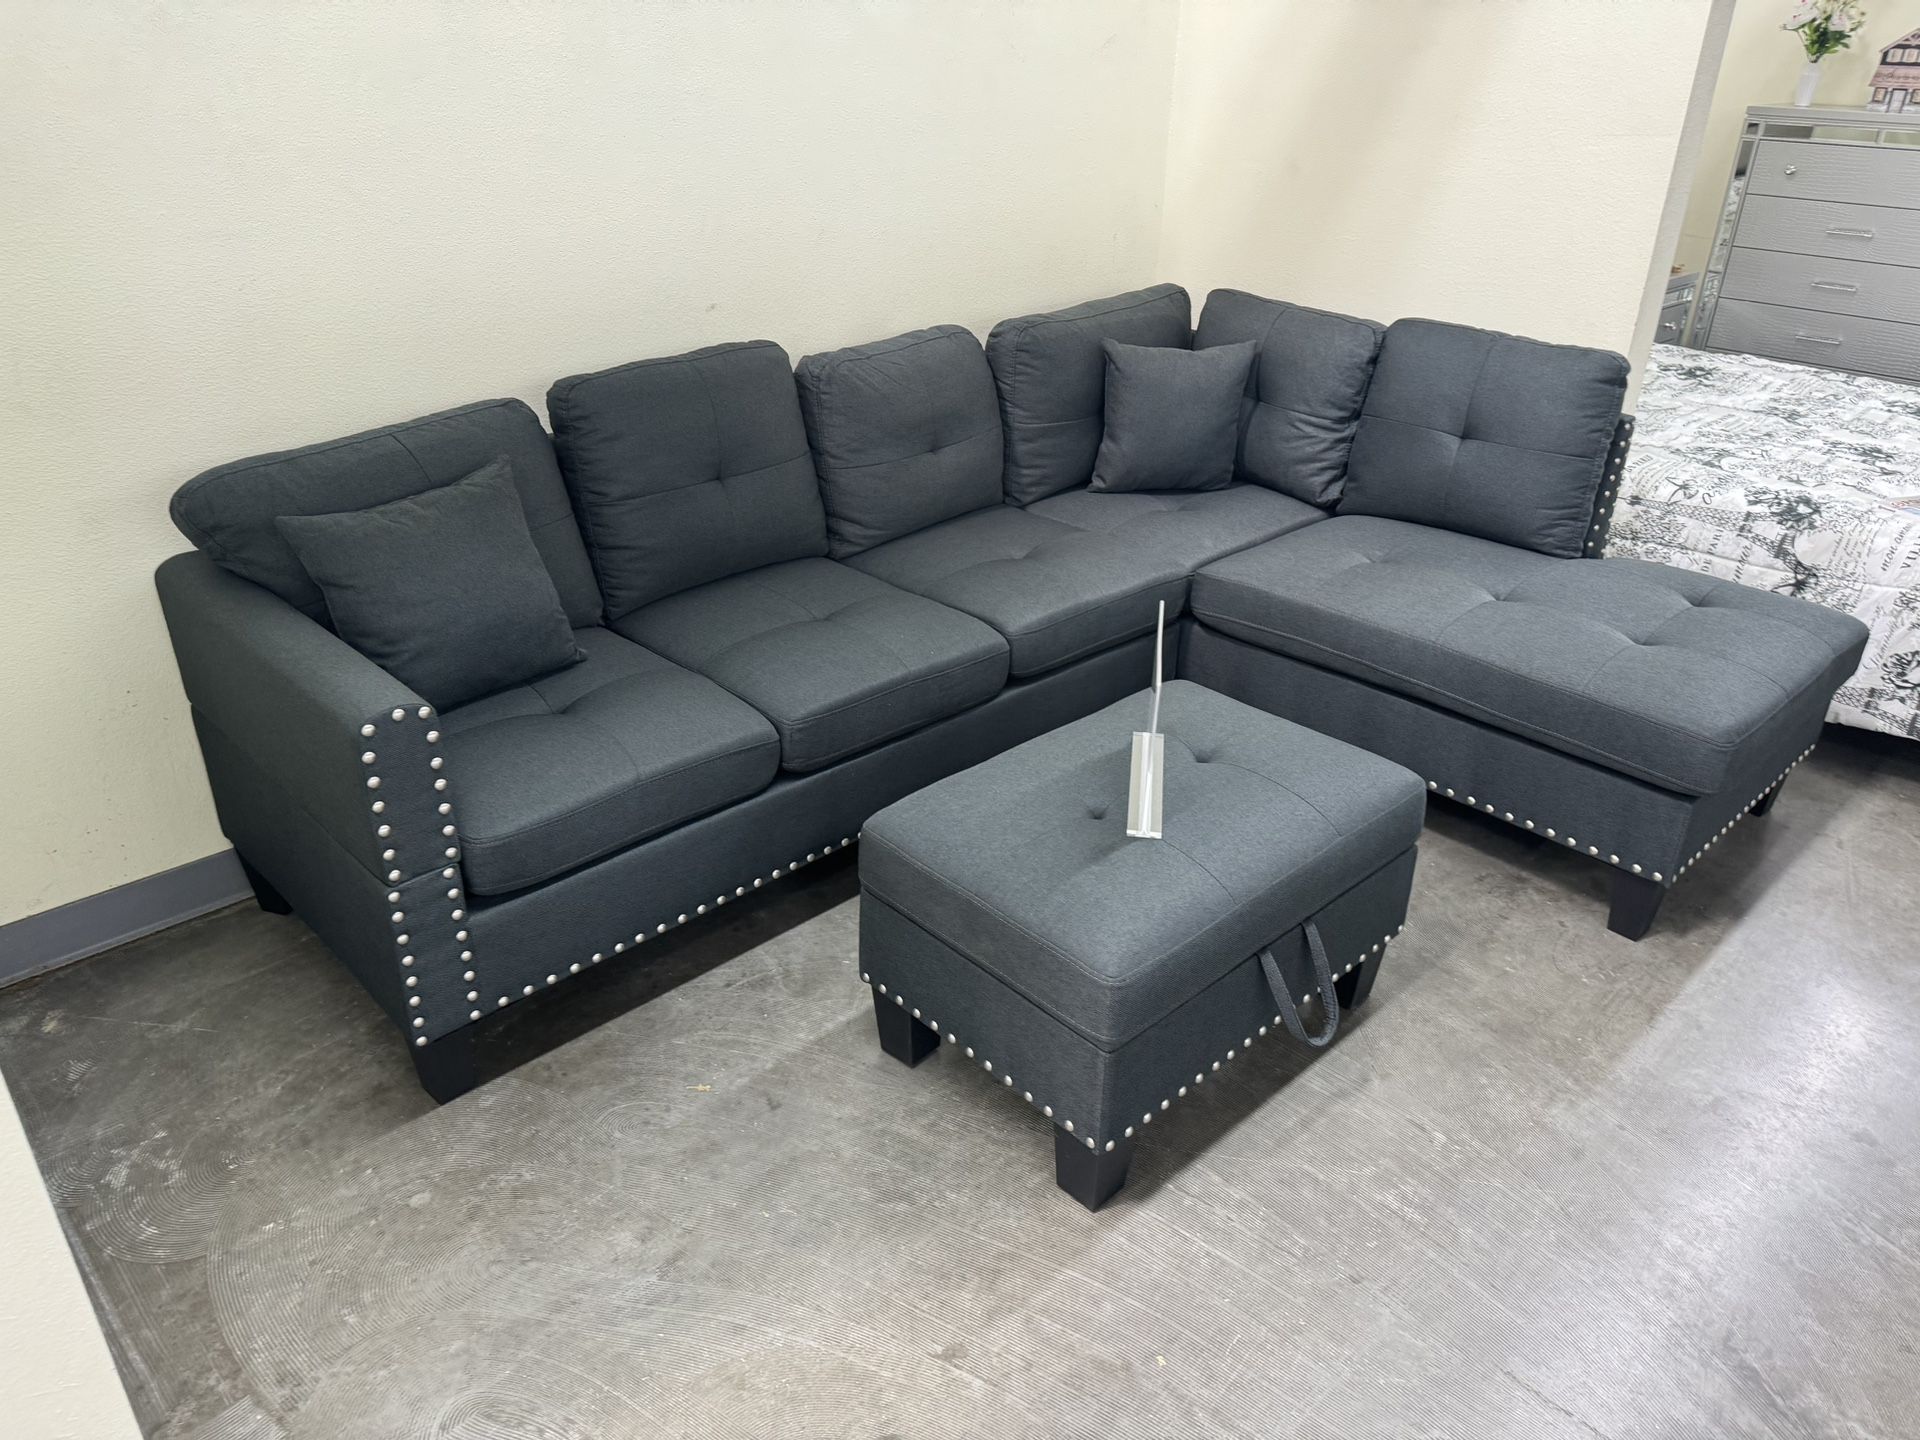 Sectional Sofa - Grey